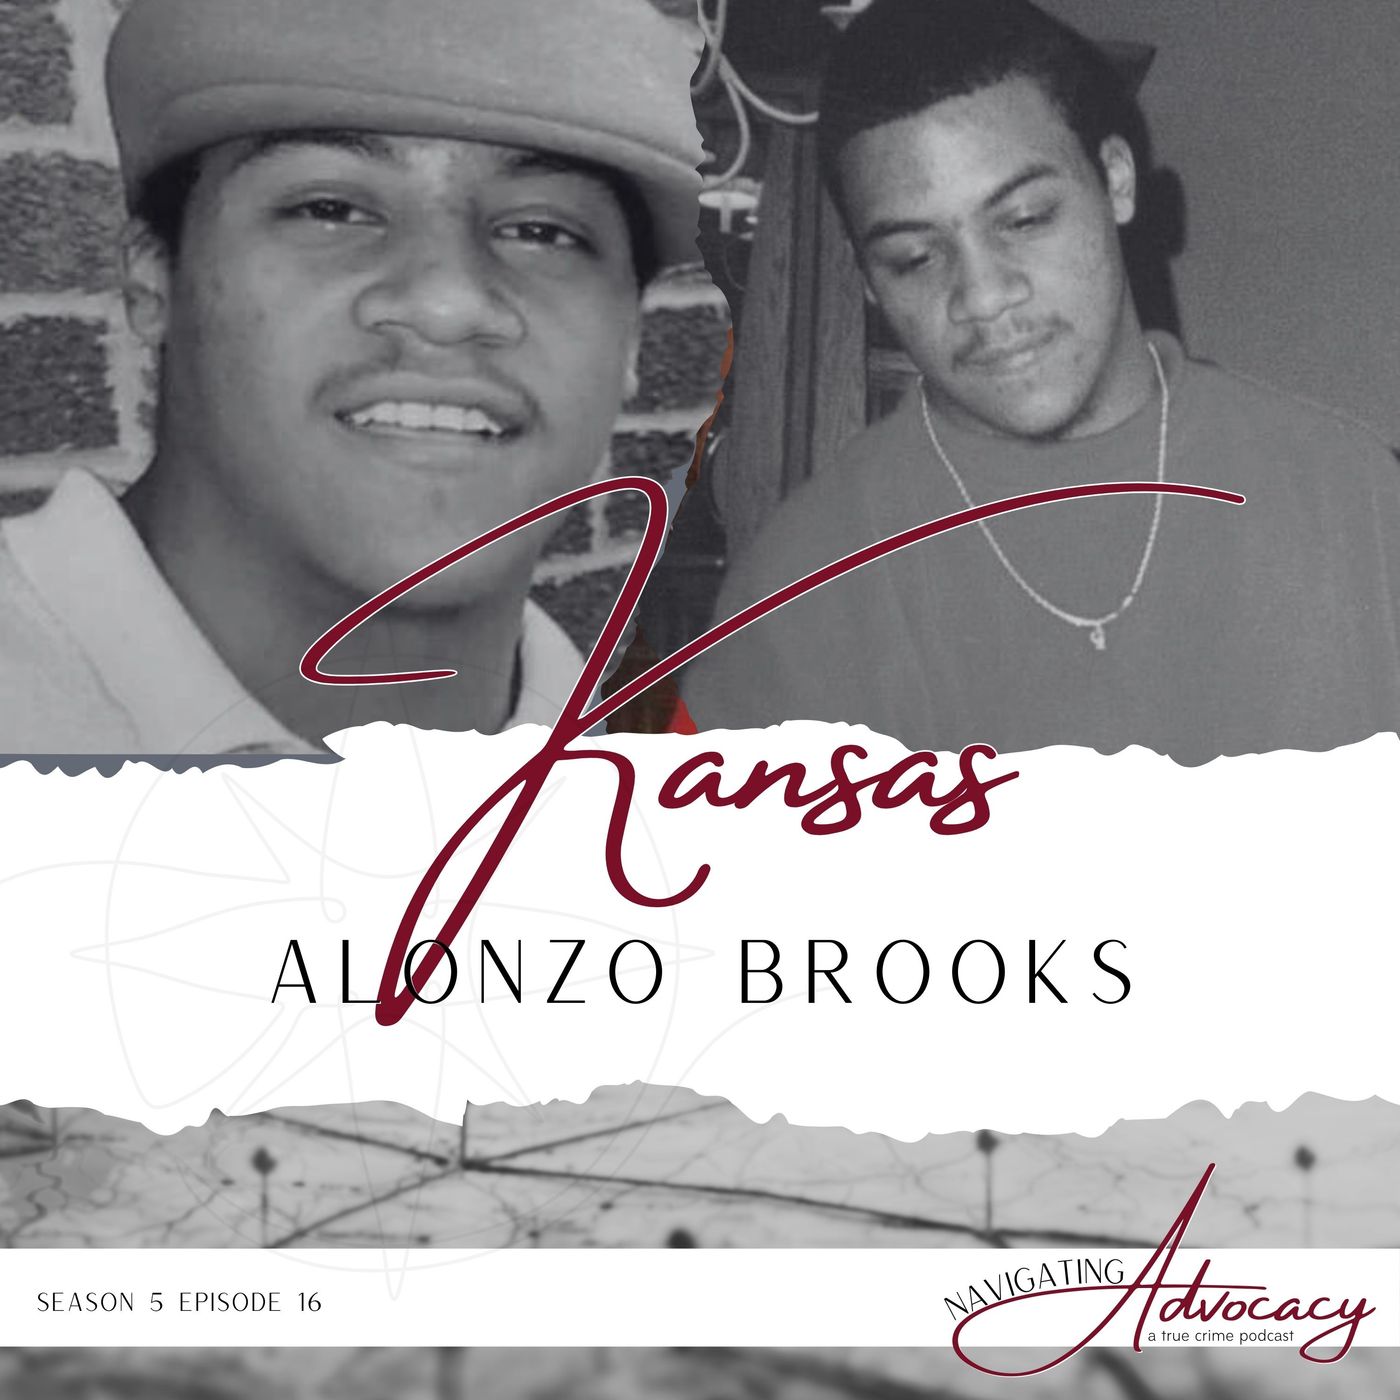 Kansas : Alonzo Brooks